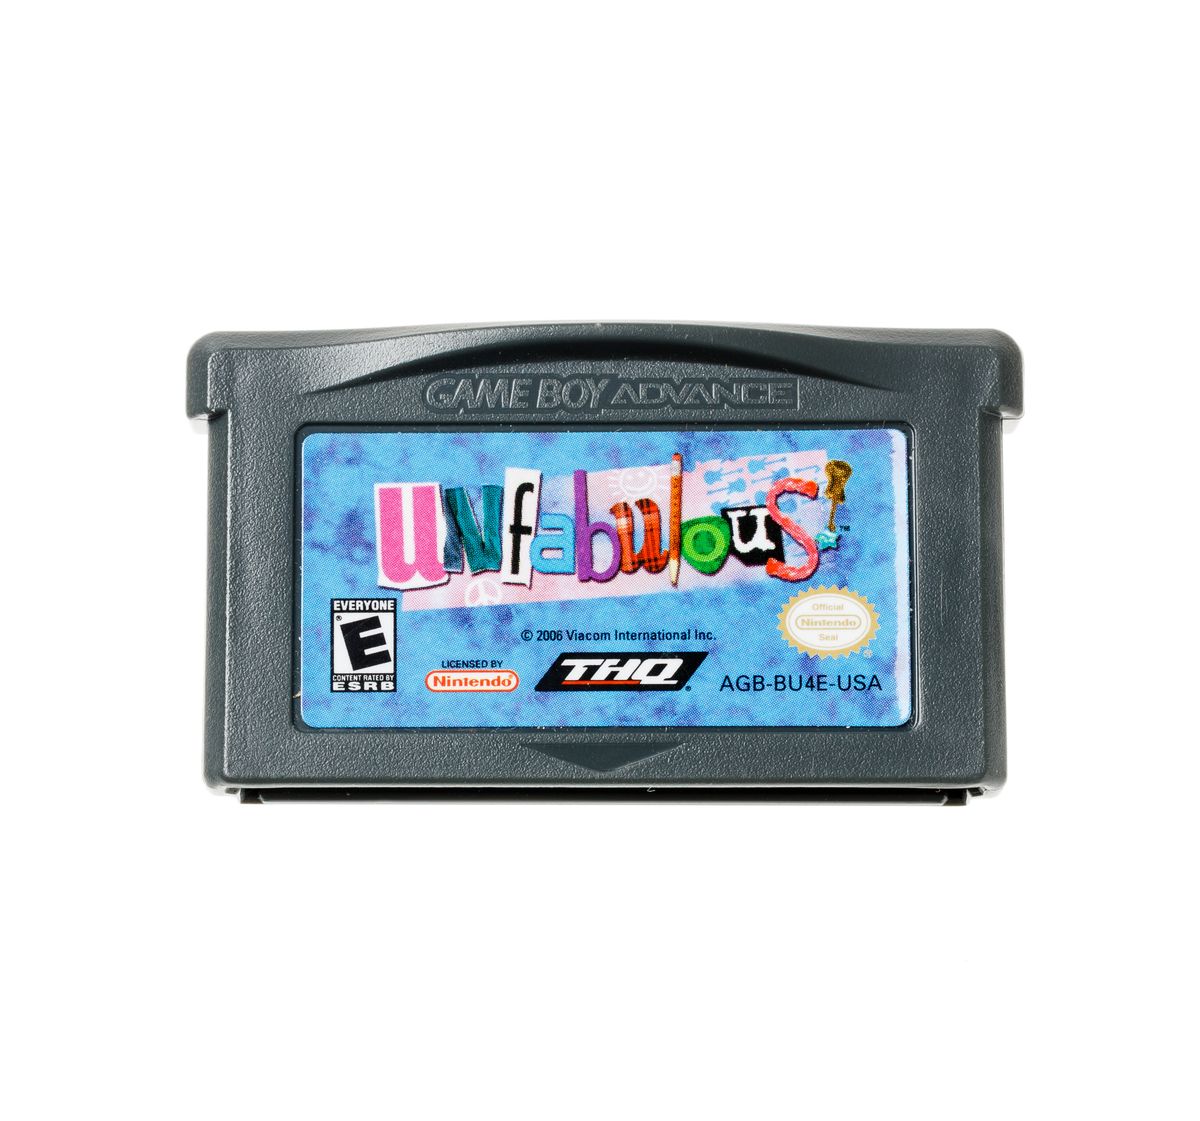 Unfabulous - Gameboy Advance Games